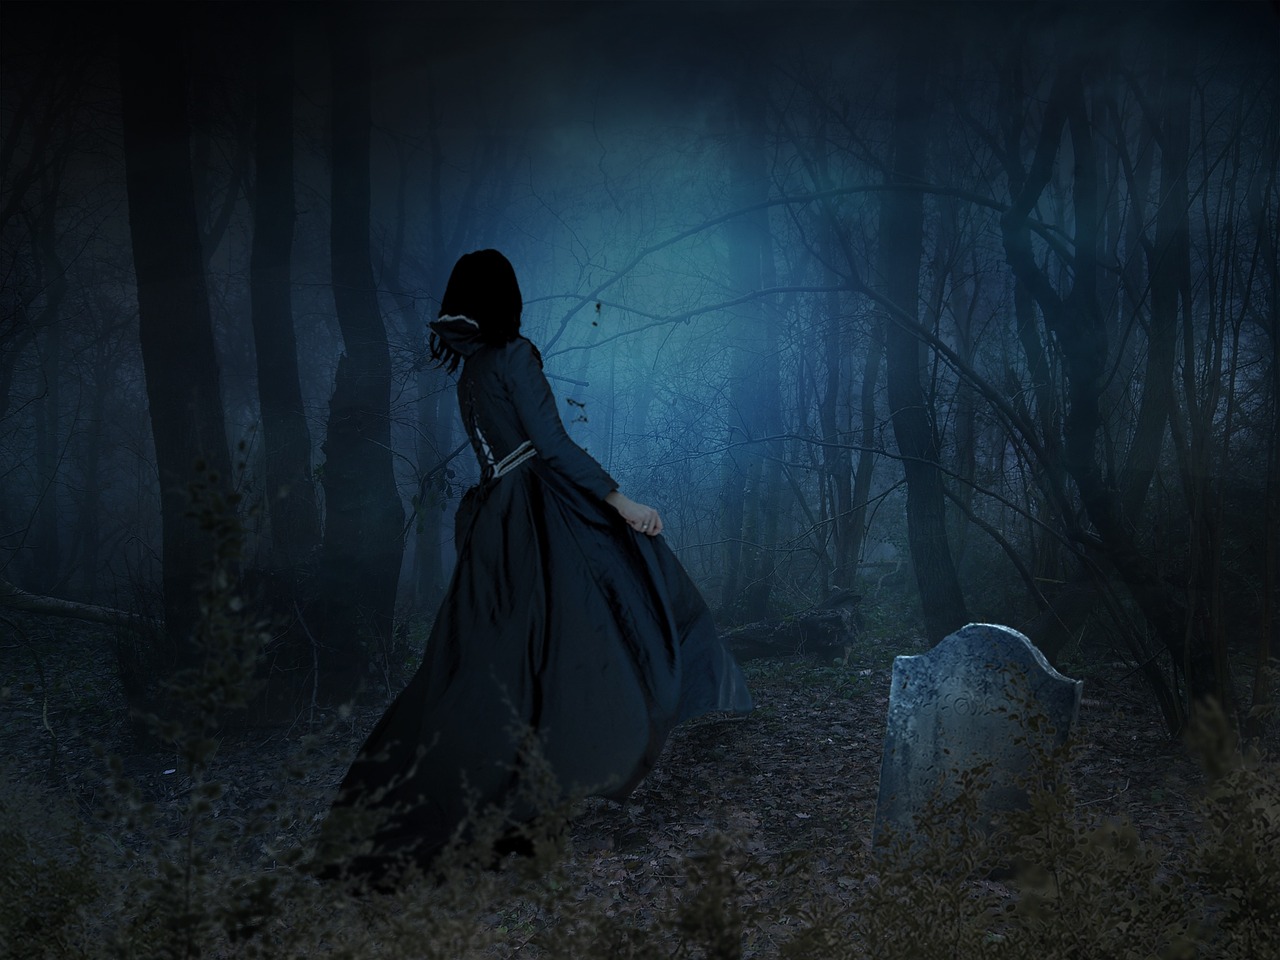 https://pixabay.com/illustrations/scary-eerie-spooky-dark-fog-666620/